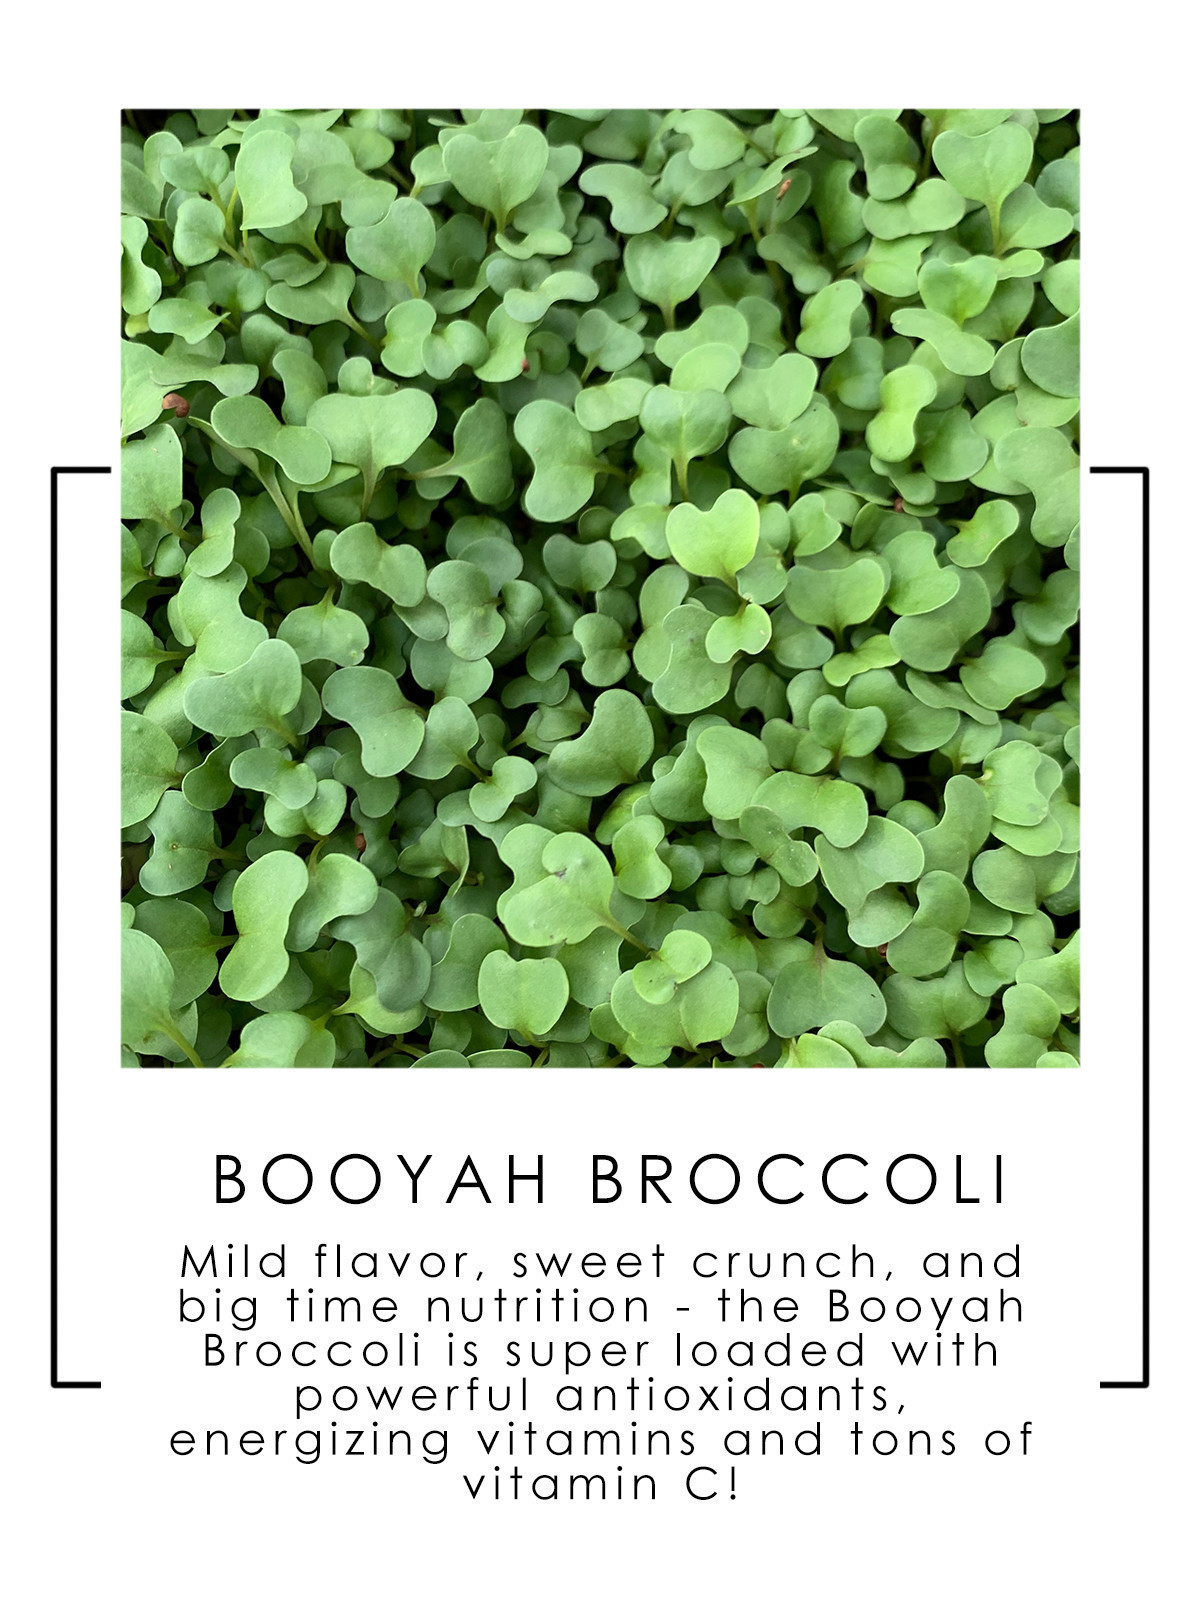 Booyah Broccoli 2015